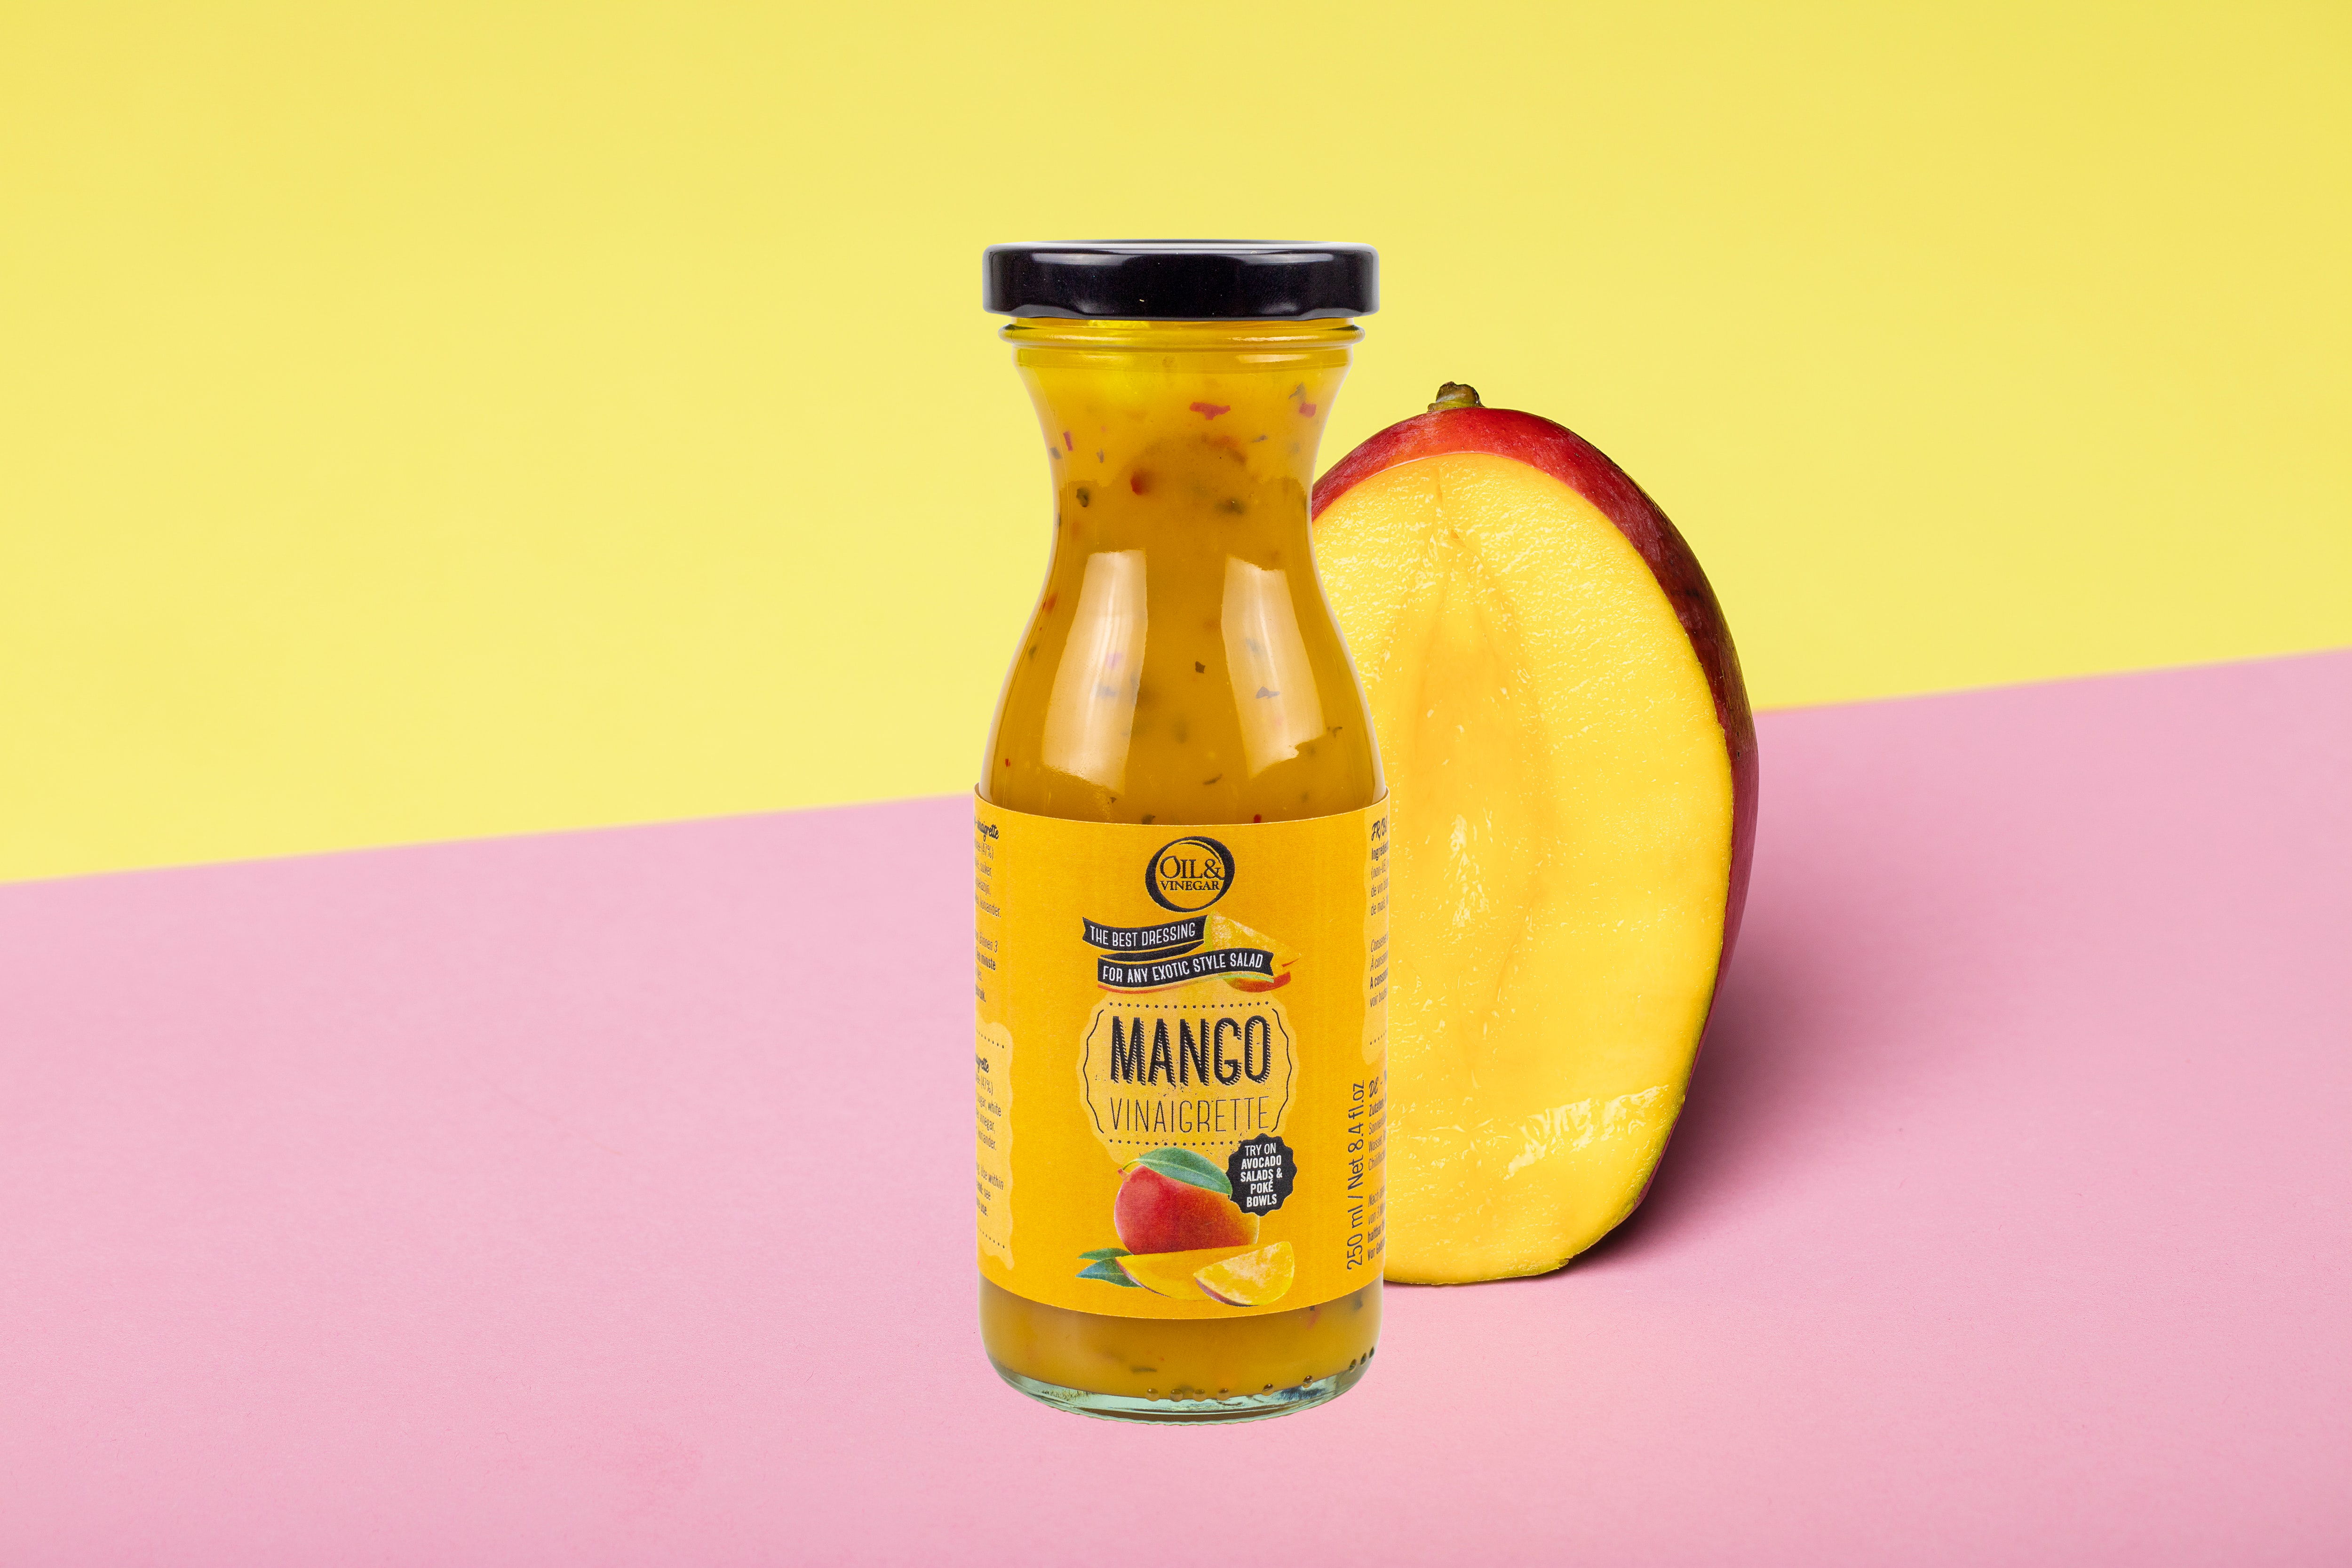 Oil & Vinegar Mango Vinaigrette (250ml) - € 6,95